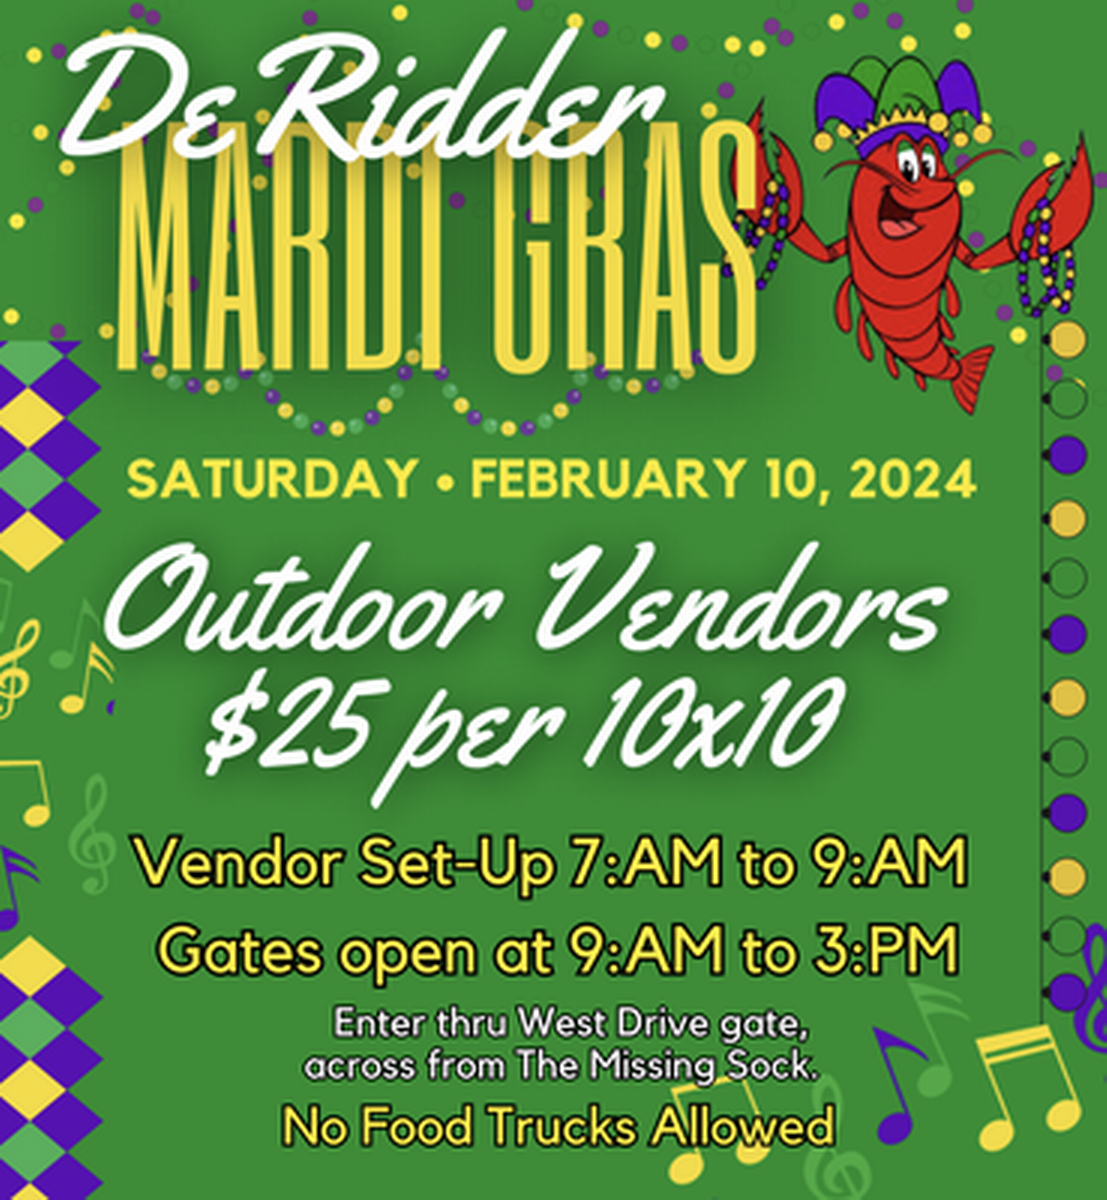 Outdoor Vendors DeRidder Mardi Gras Events Feb 10, 2024